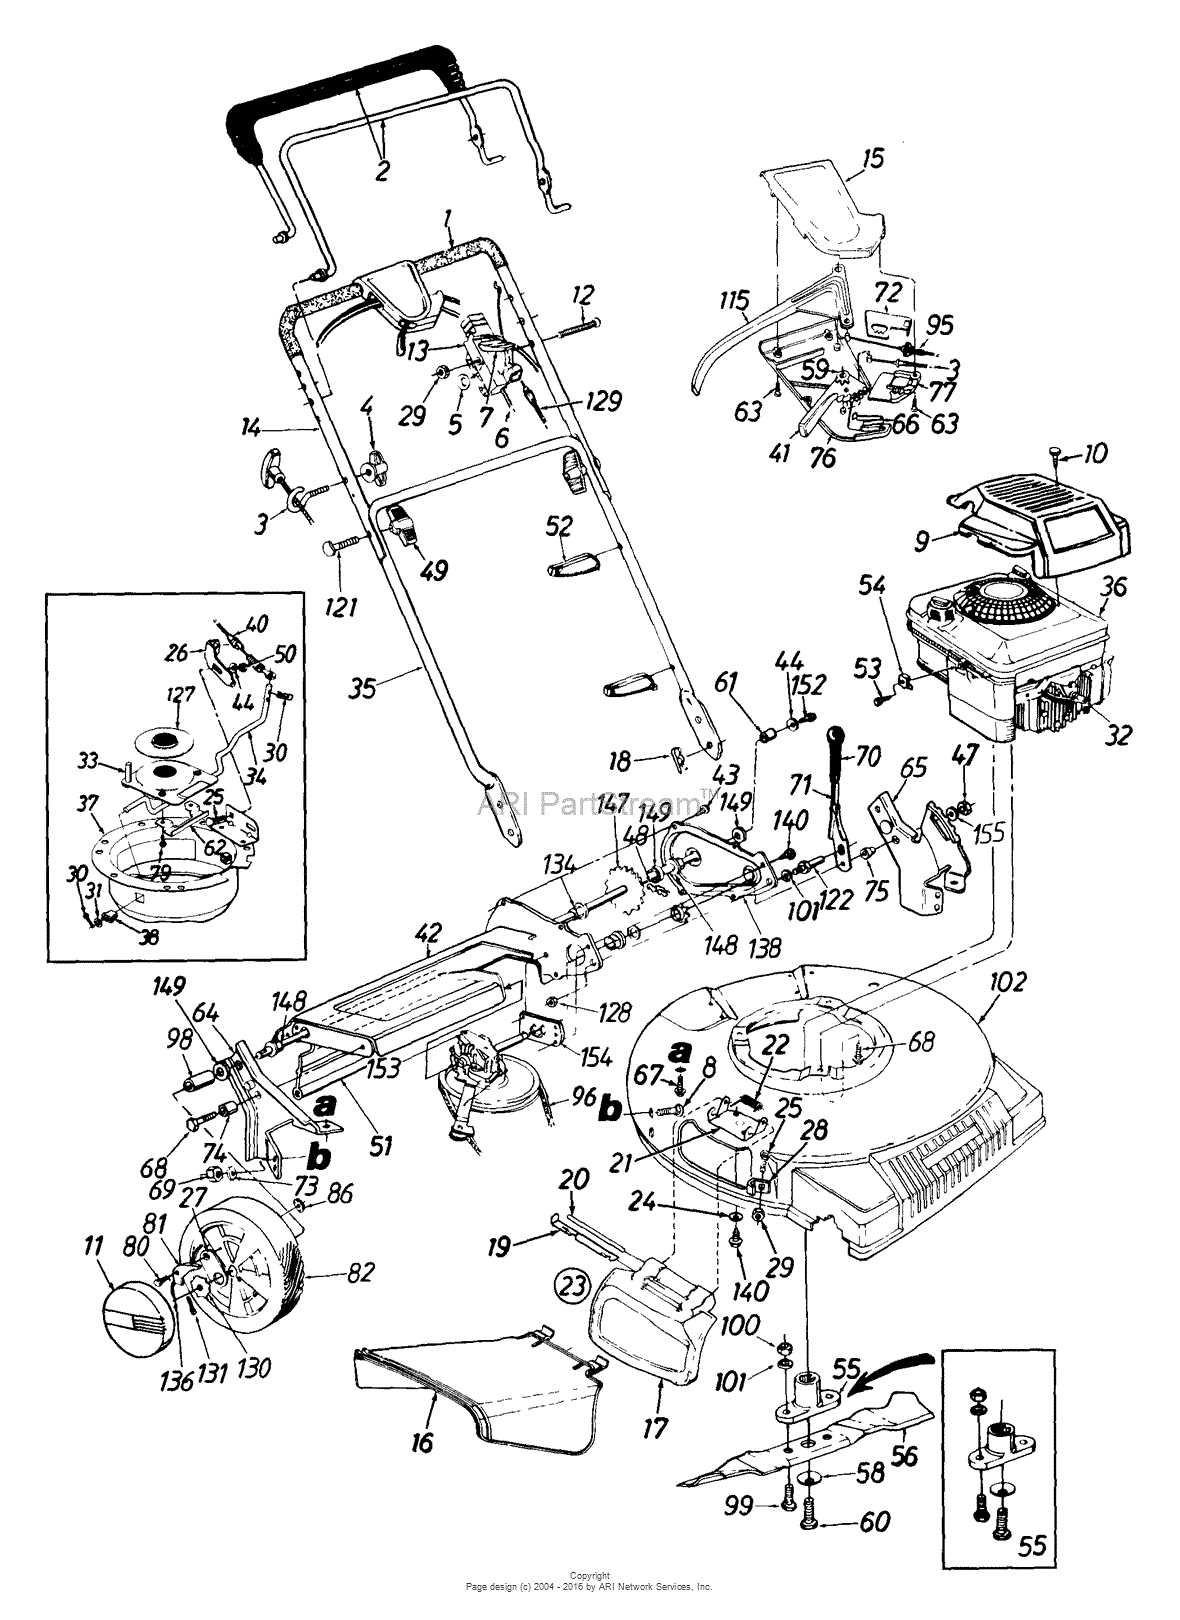 35 Craftsman Self Propelled Lawn Mower Parts Diagram - Wiring Diagram List